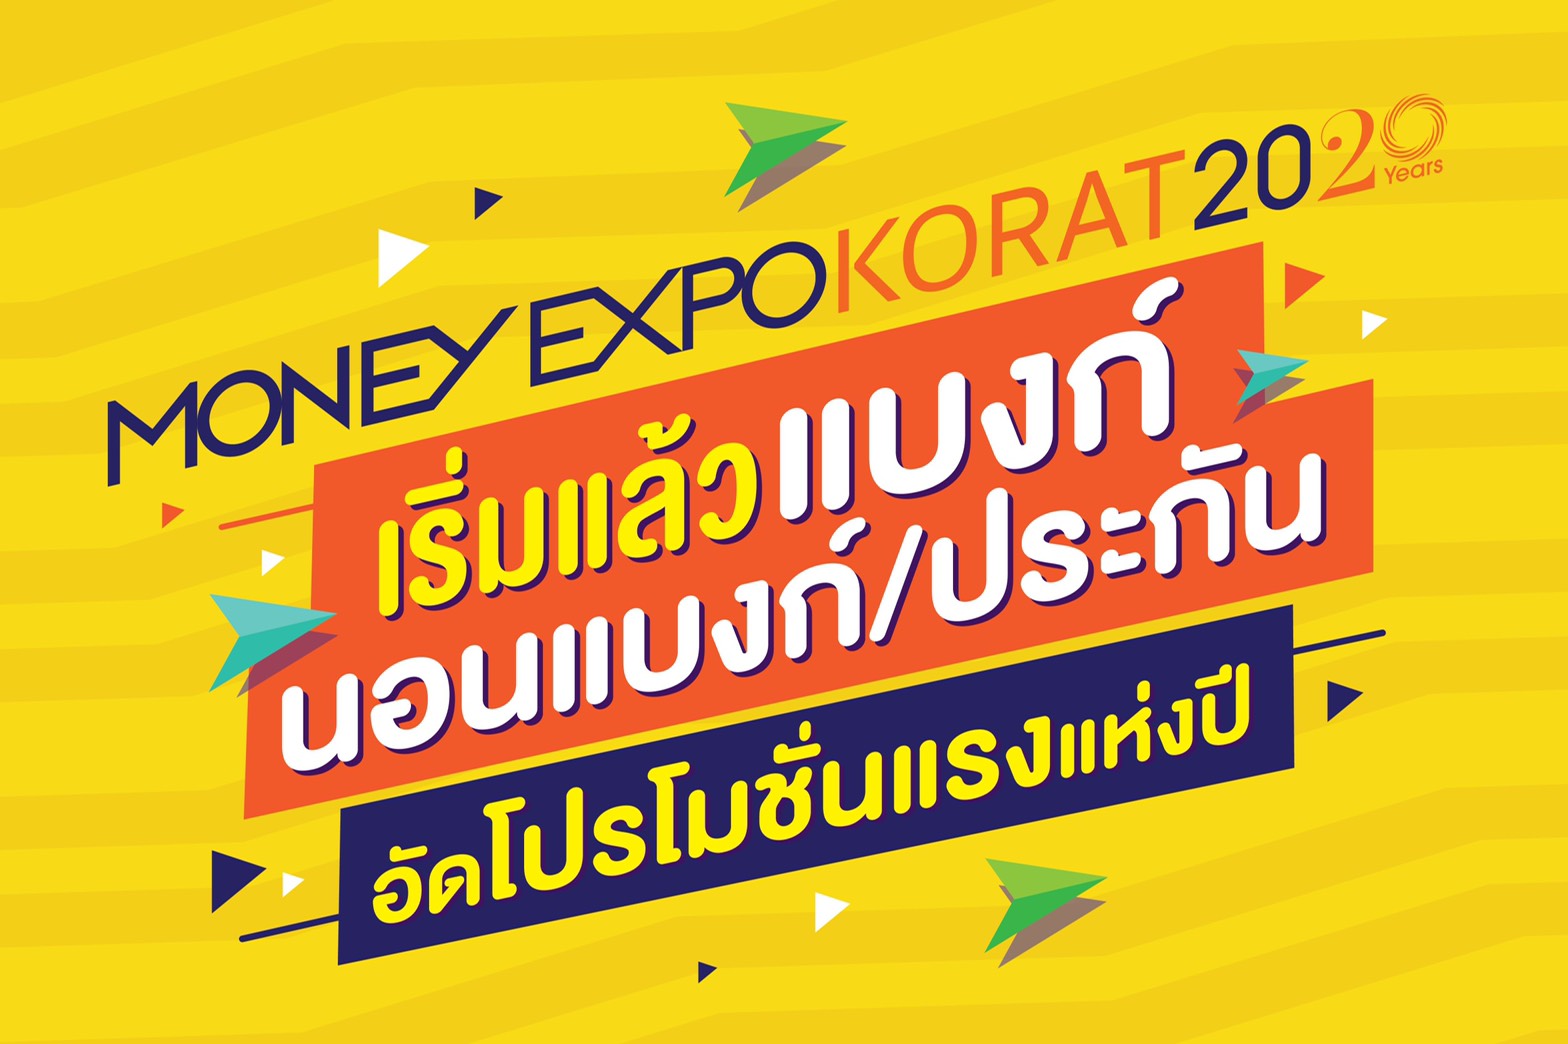 Money Expo Korat 2020 เปิดแล้ว แบงก์/นอนแบงก์/ประกัน อัดโปรโมชั่นแรงแห่งปี